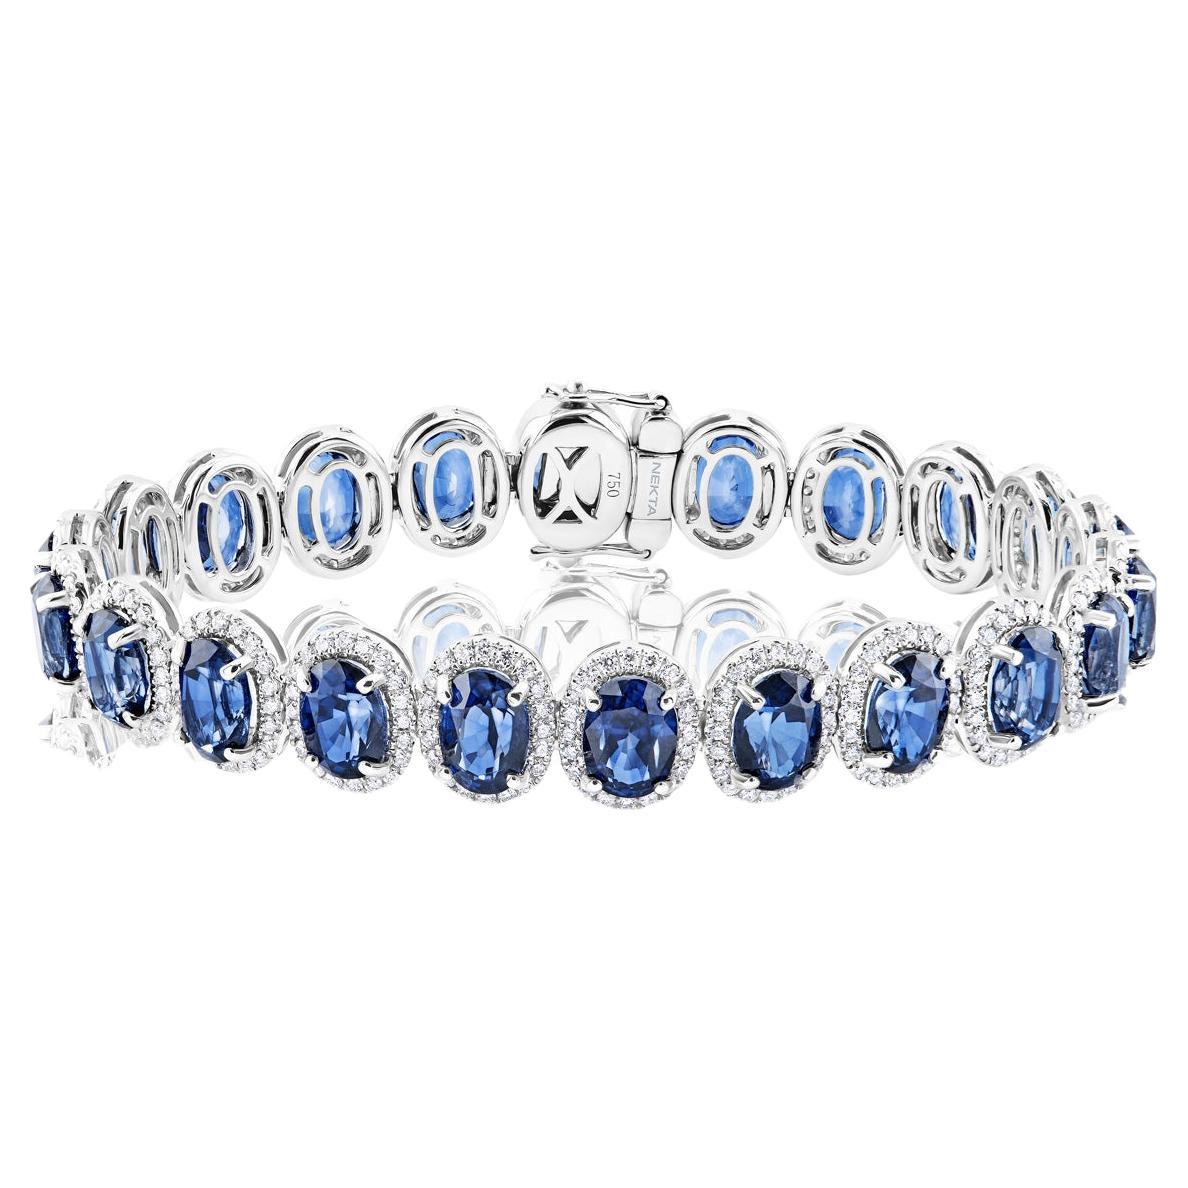 26 Carat Oval Cut J'adore Blue Sapphire Bracelet Certified